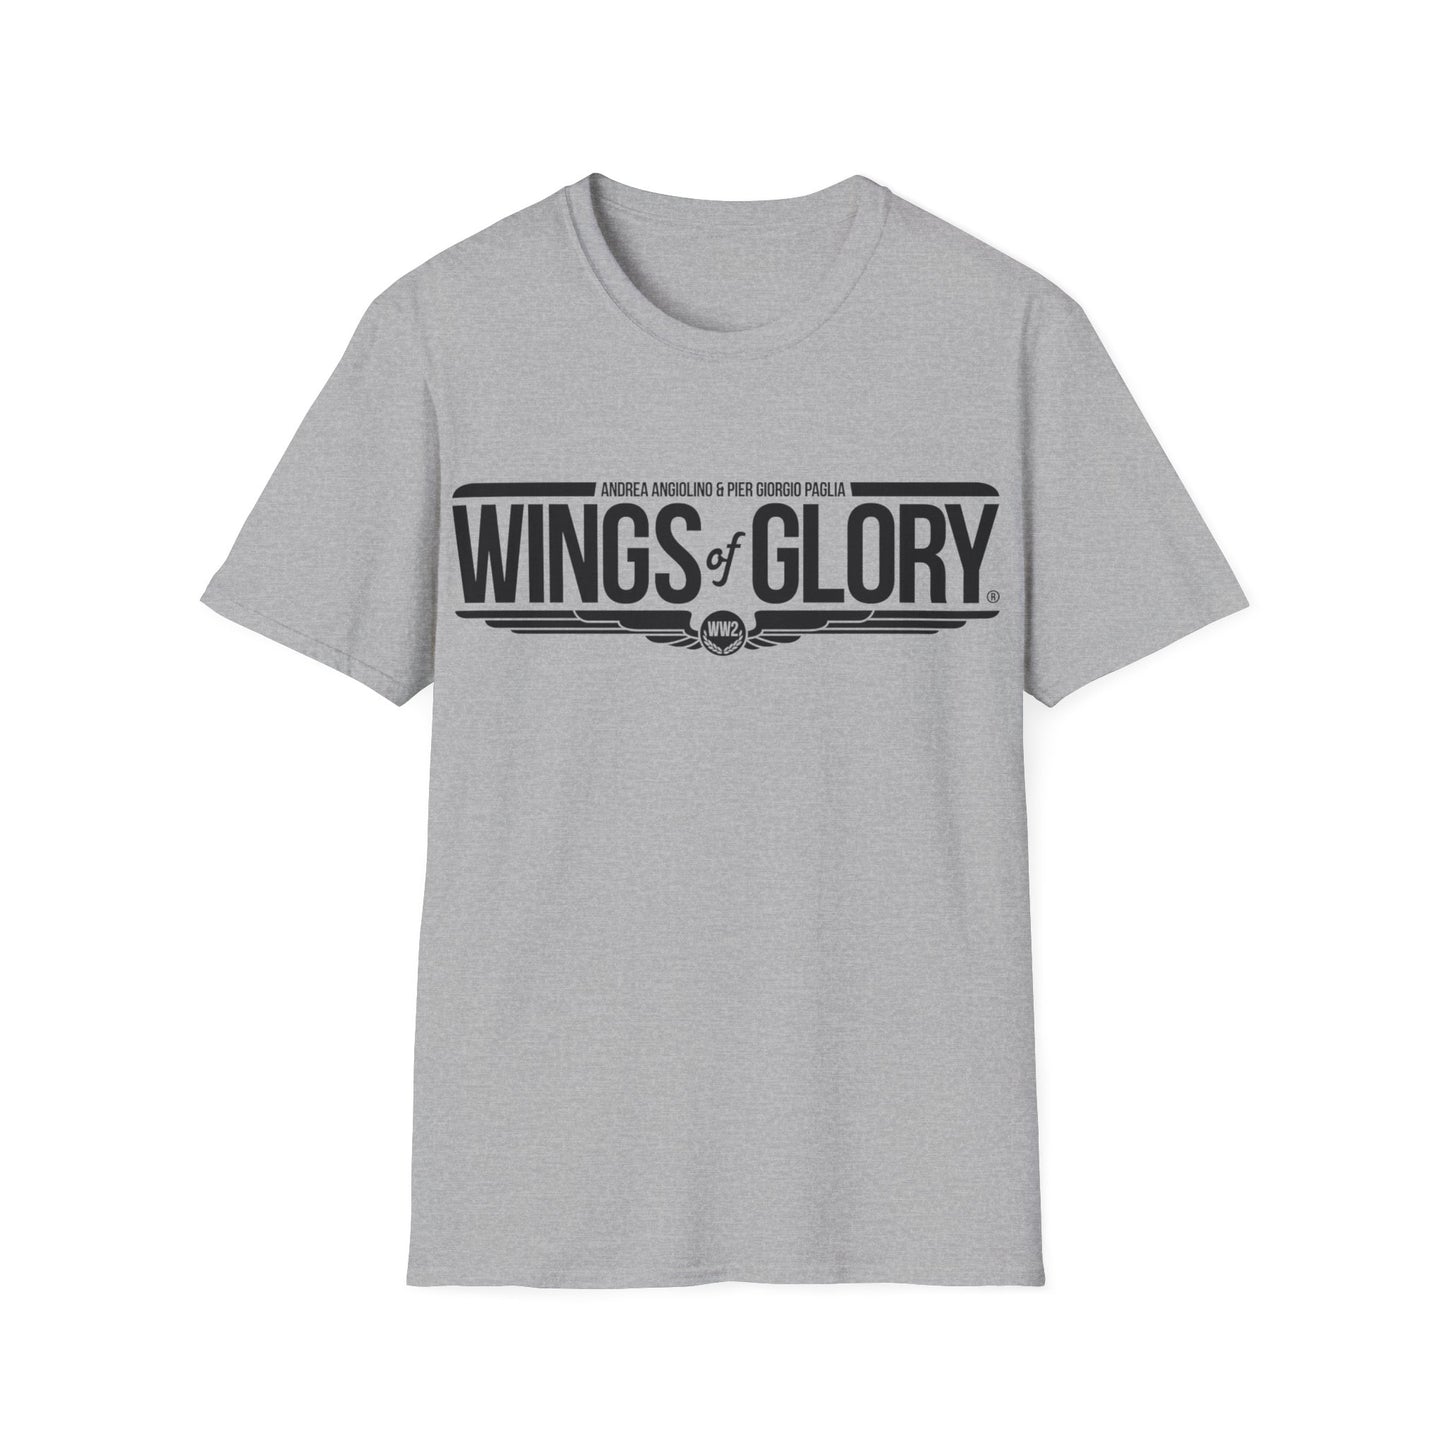 Wings Of Glory WW2 Logo shirt